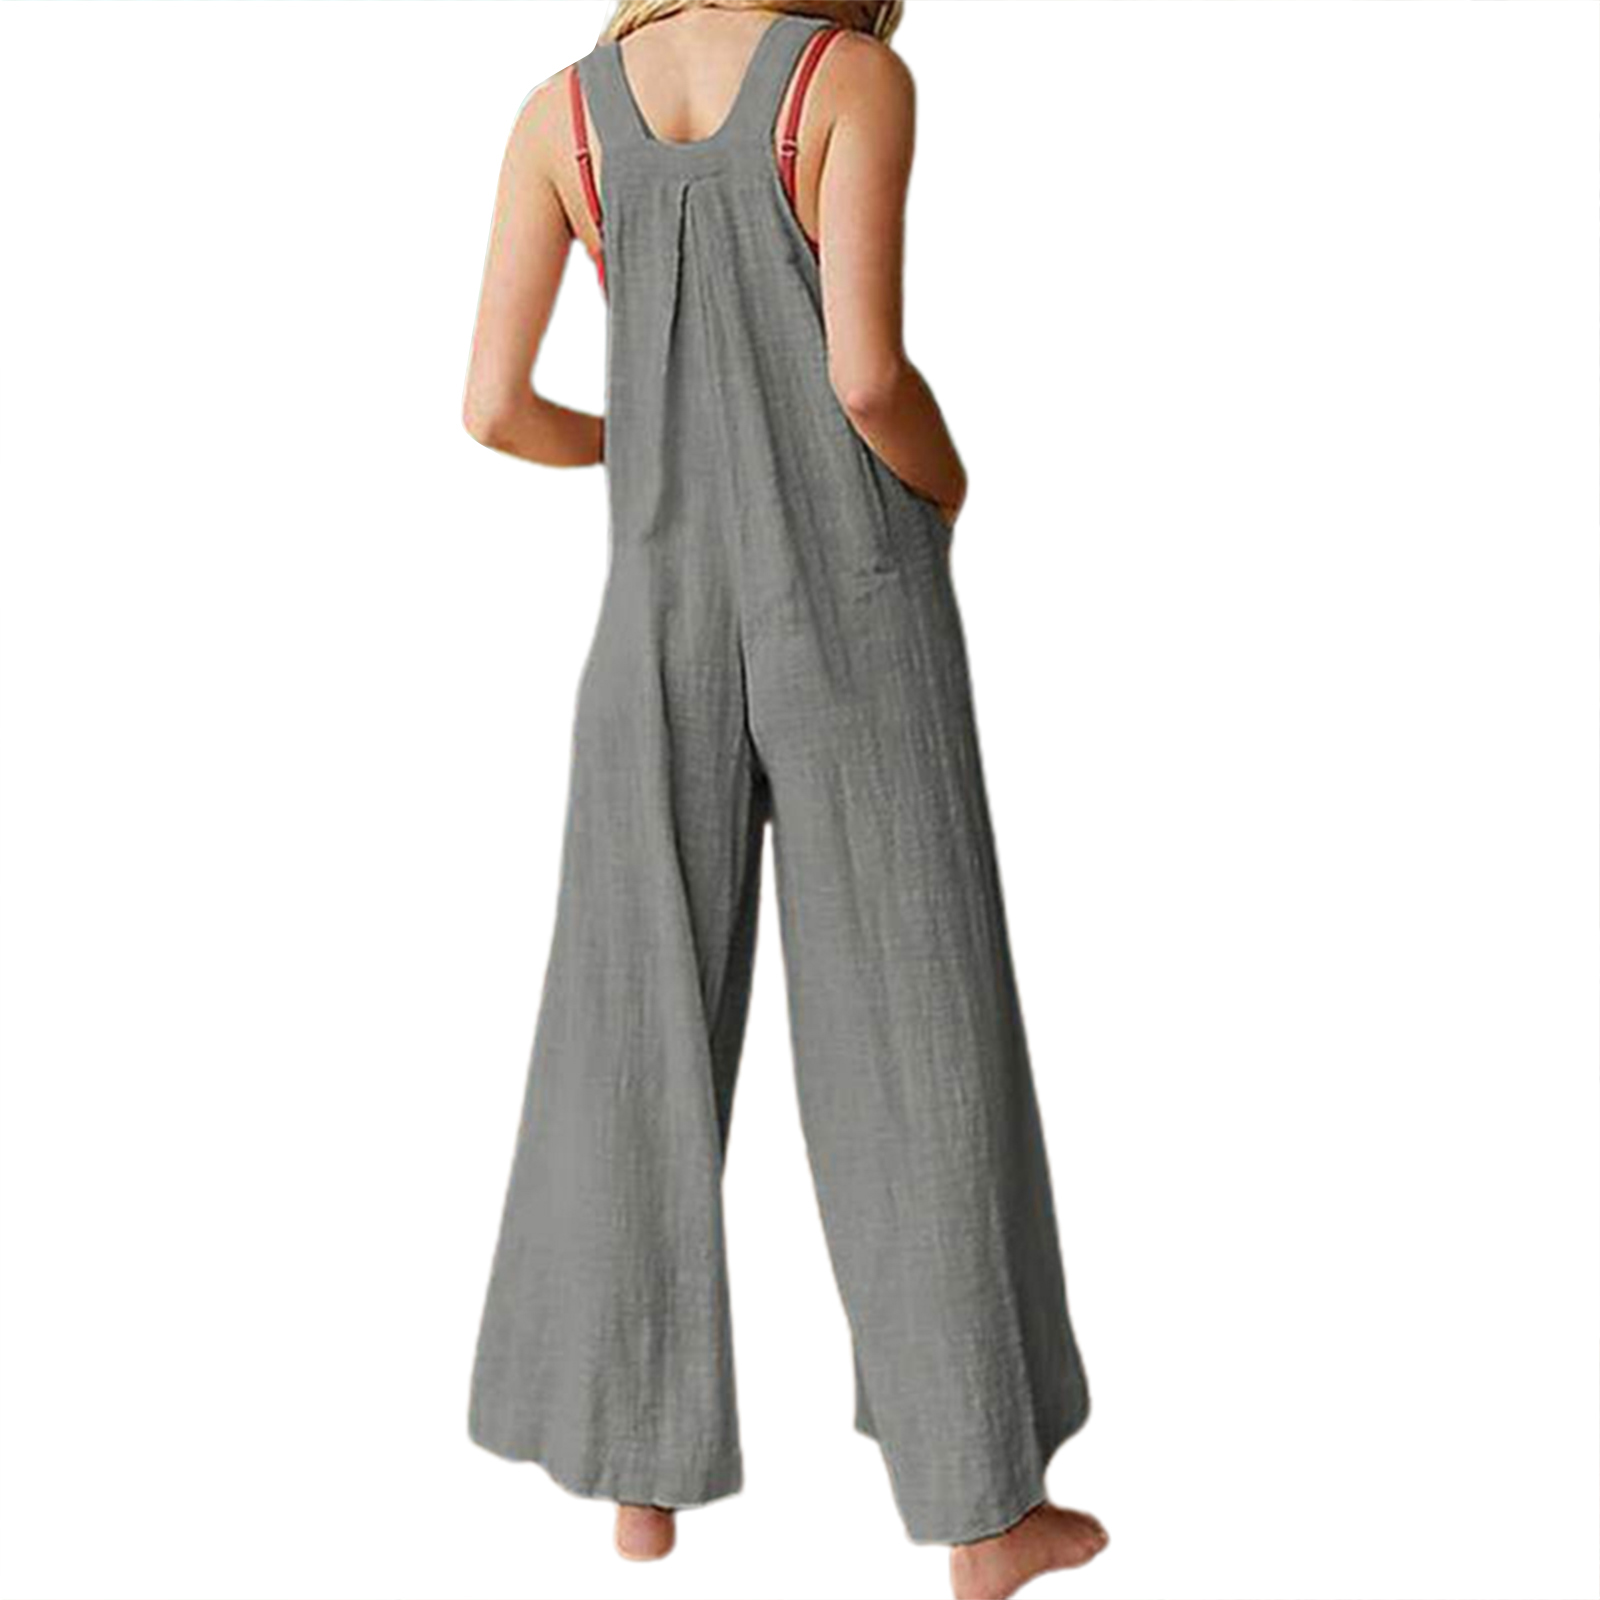 Women Boho Printed Casual Overalls Loose Baggy Bib Pants Jumpsuit ...